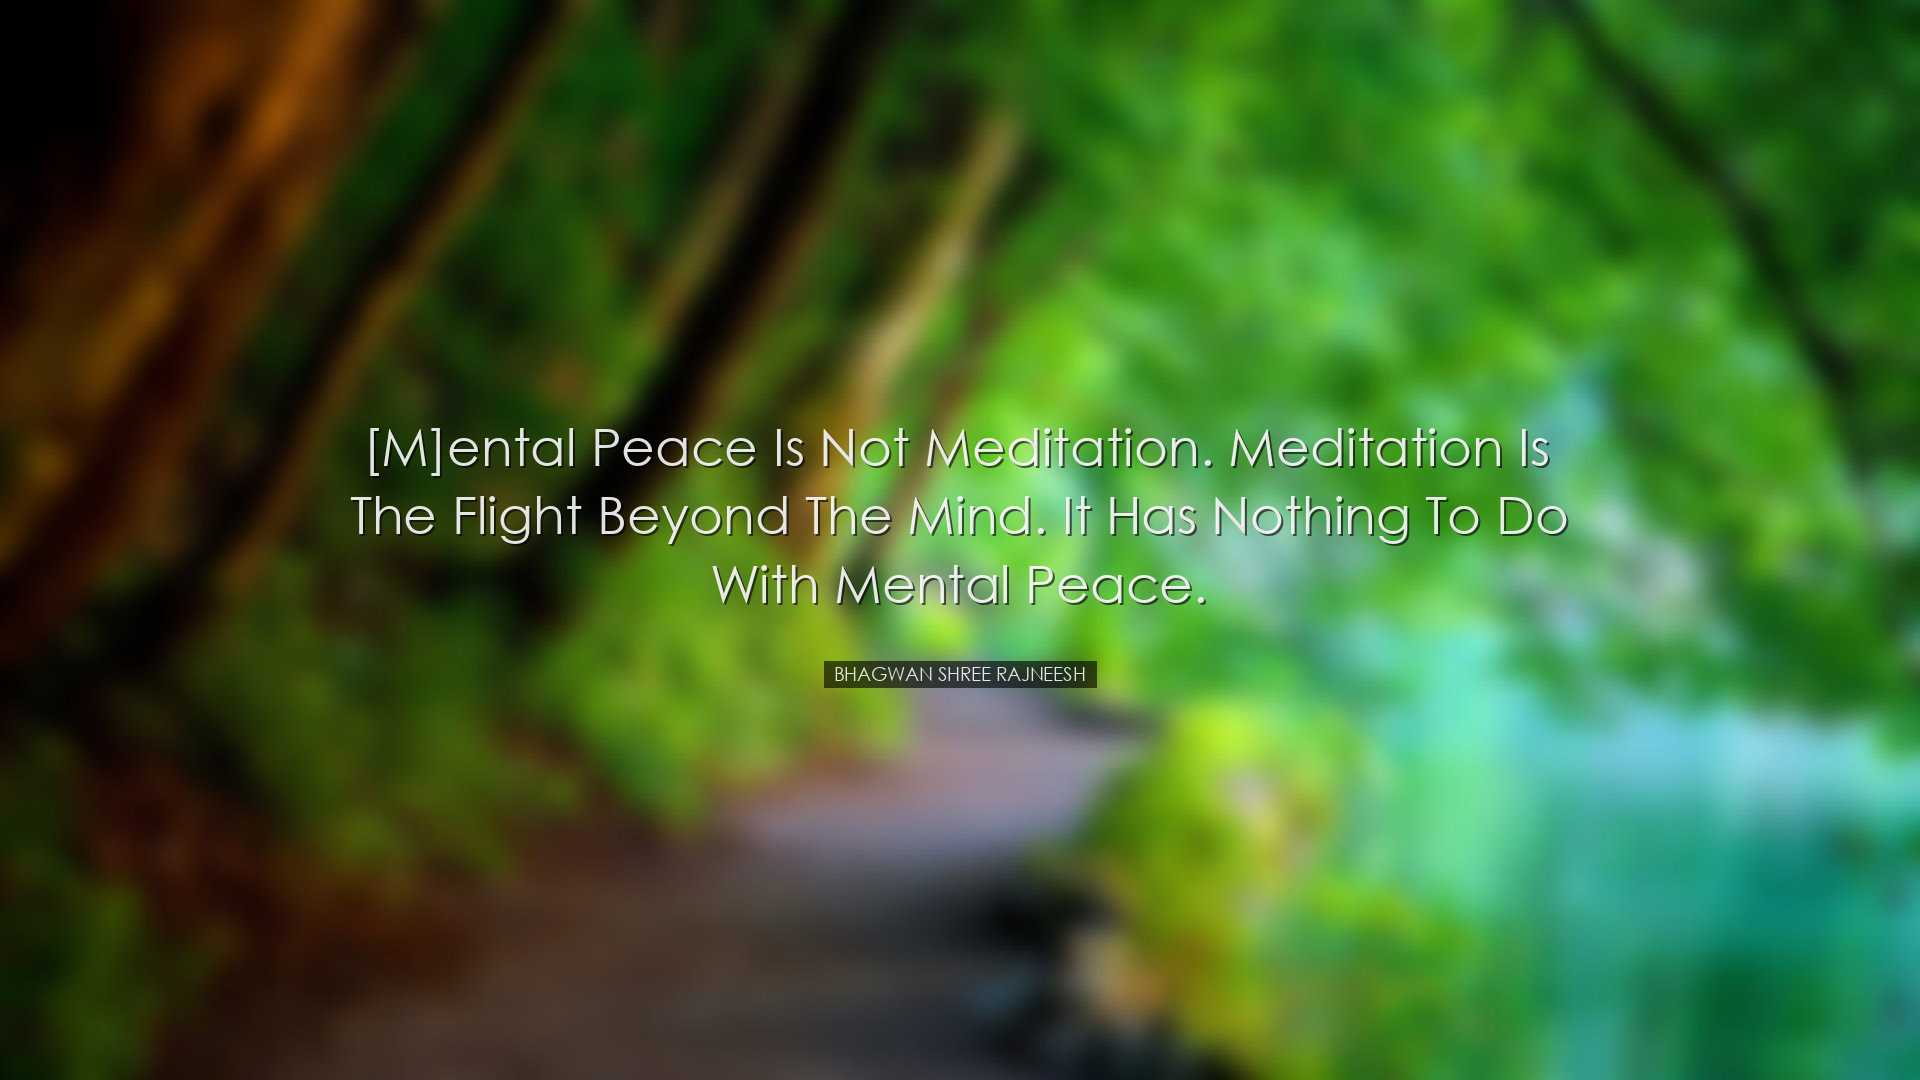 [M]ental peace is not meditation. Meditation is the flight beyond